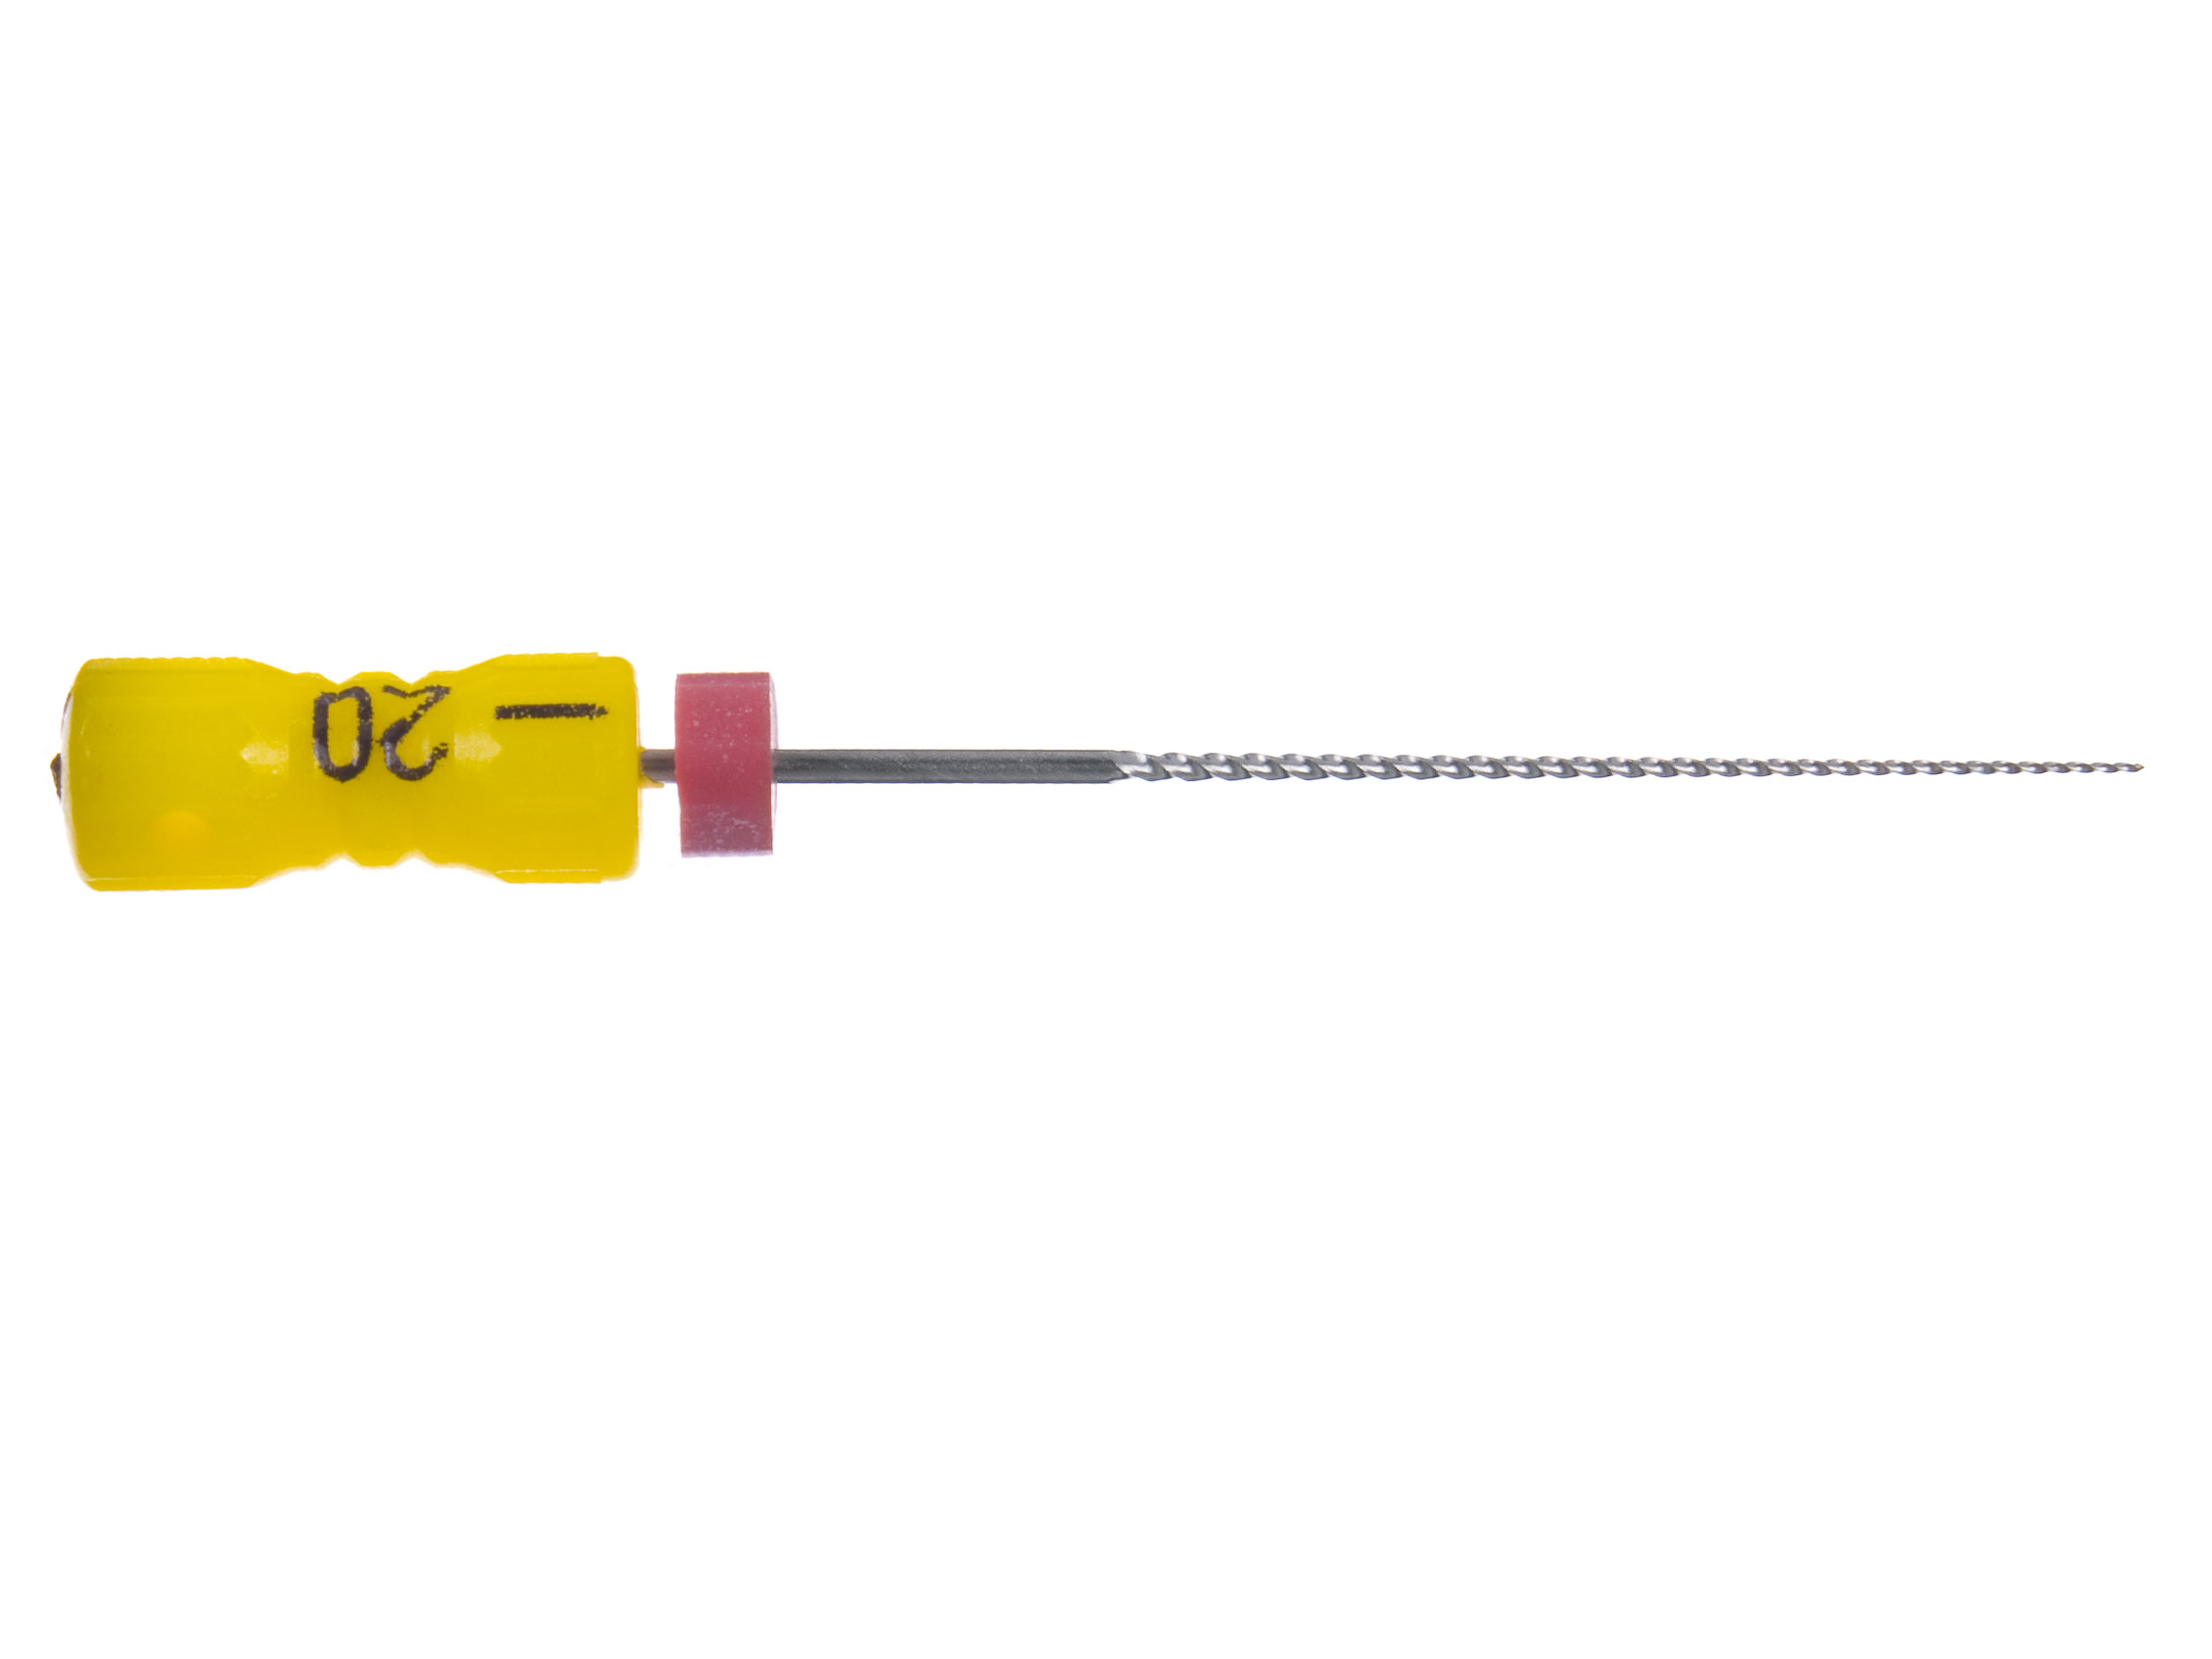 Helifile n20 L:21 mm Handle 09 ISO - инструменты эндодонтические